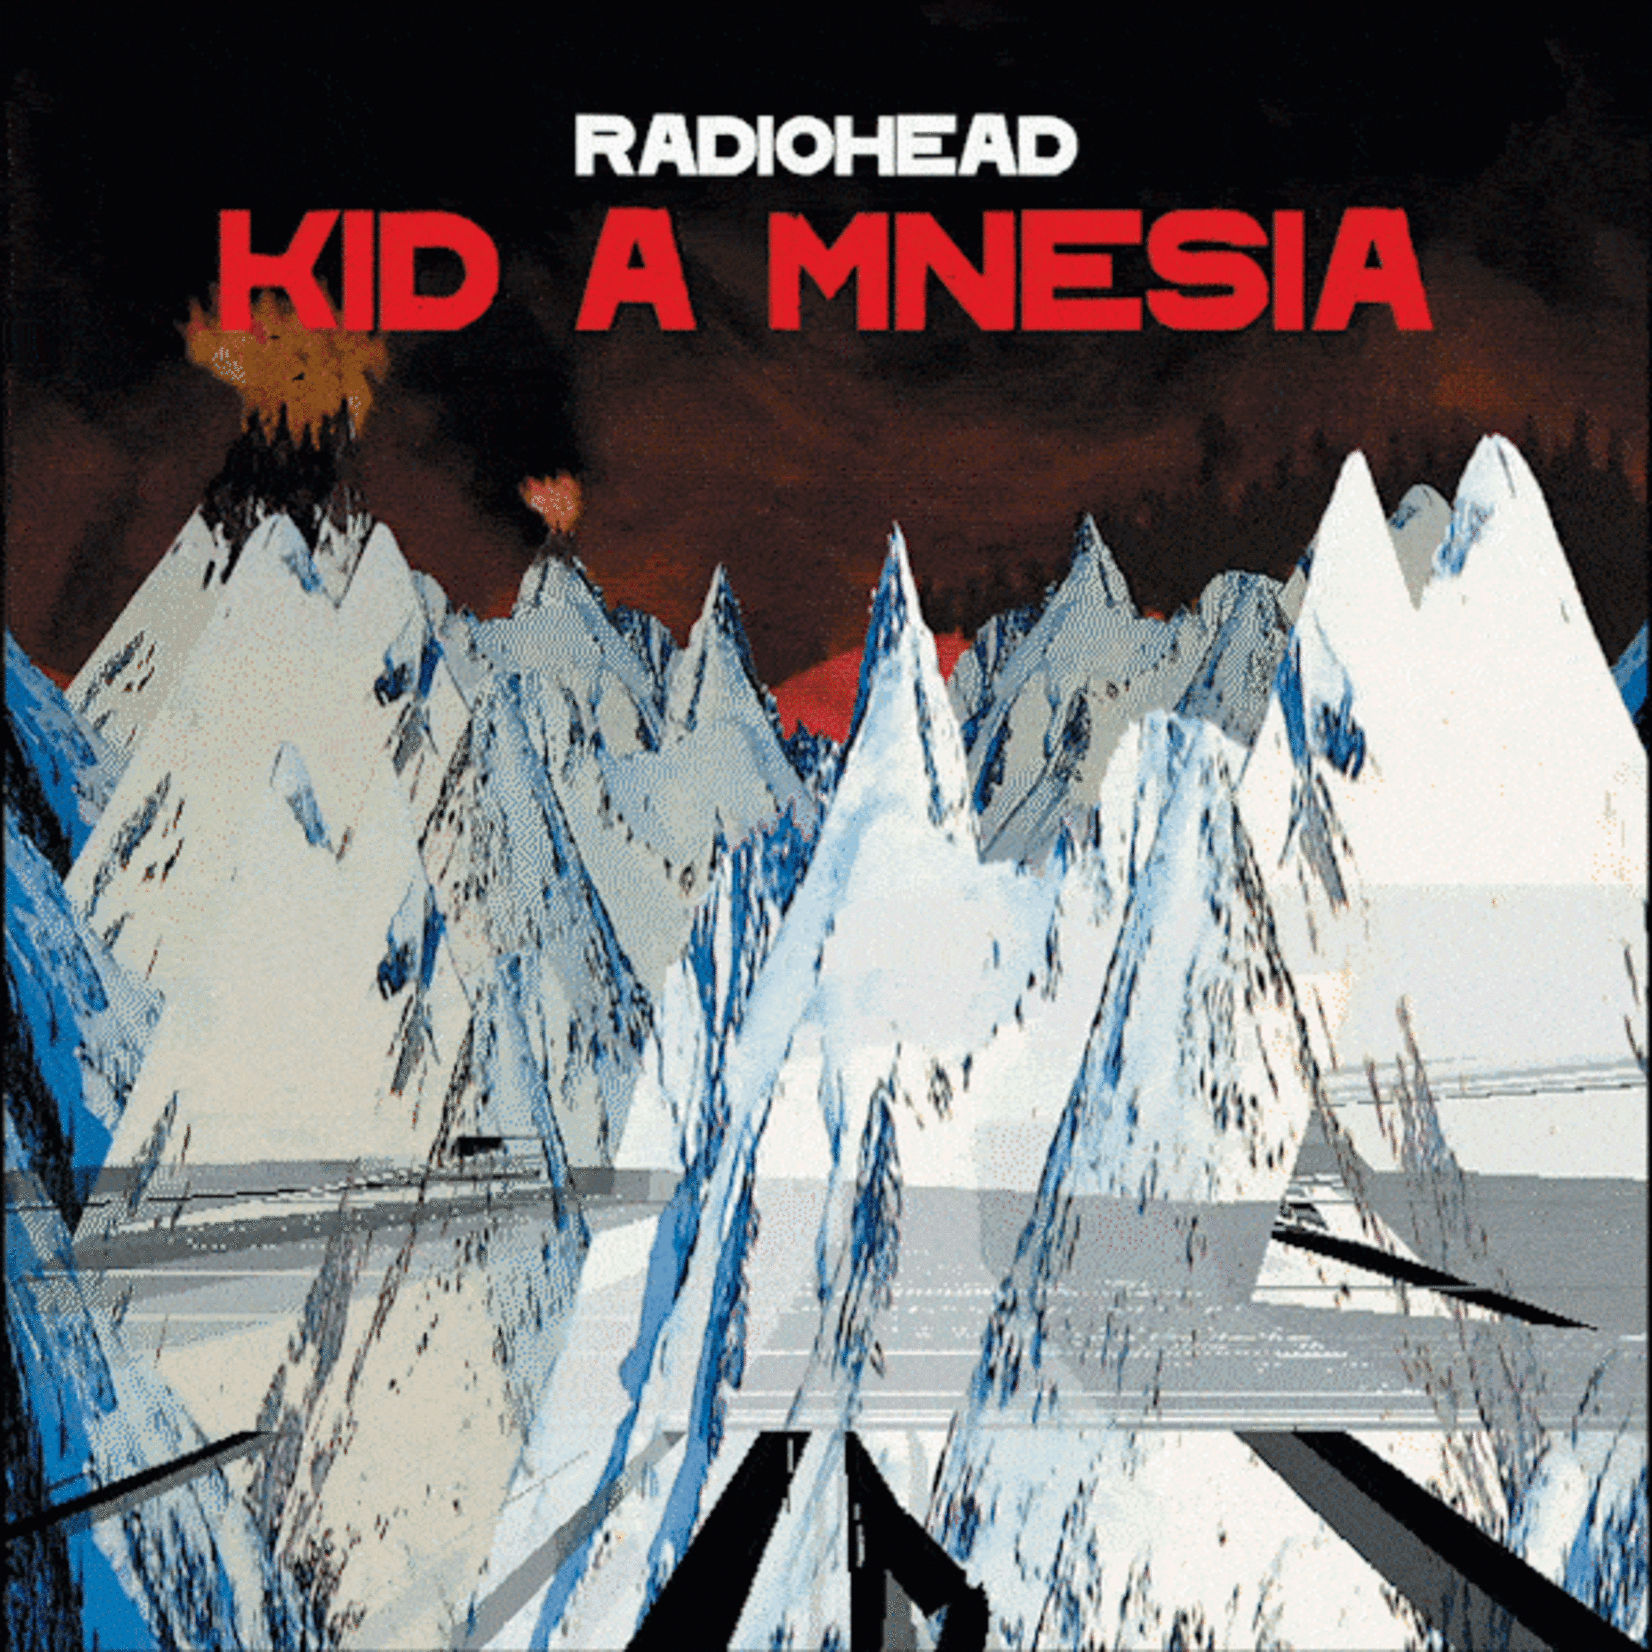 [New] Radiohead - Kid a Mnesia (3LP)